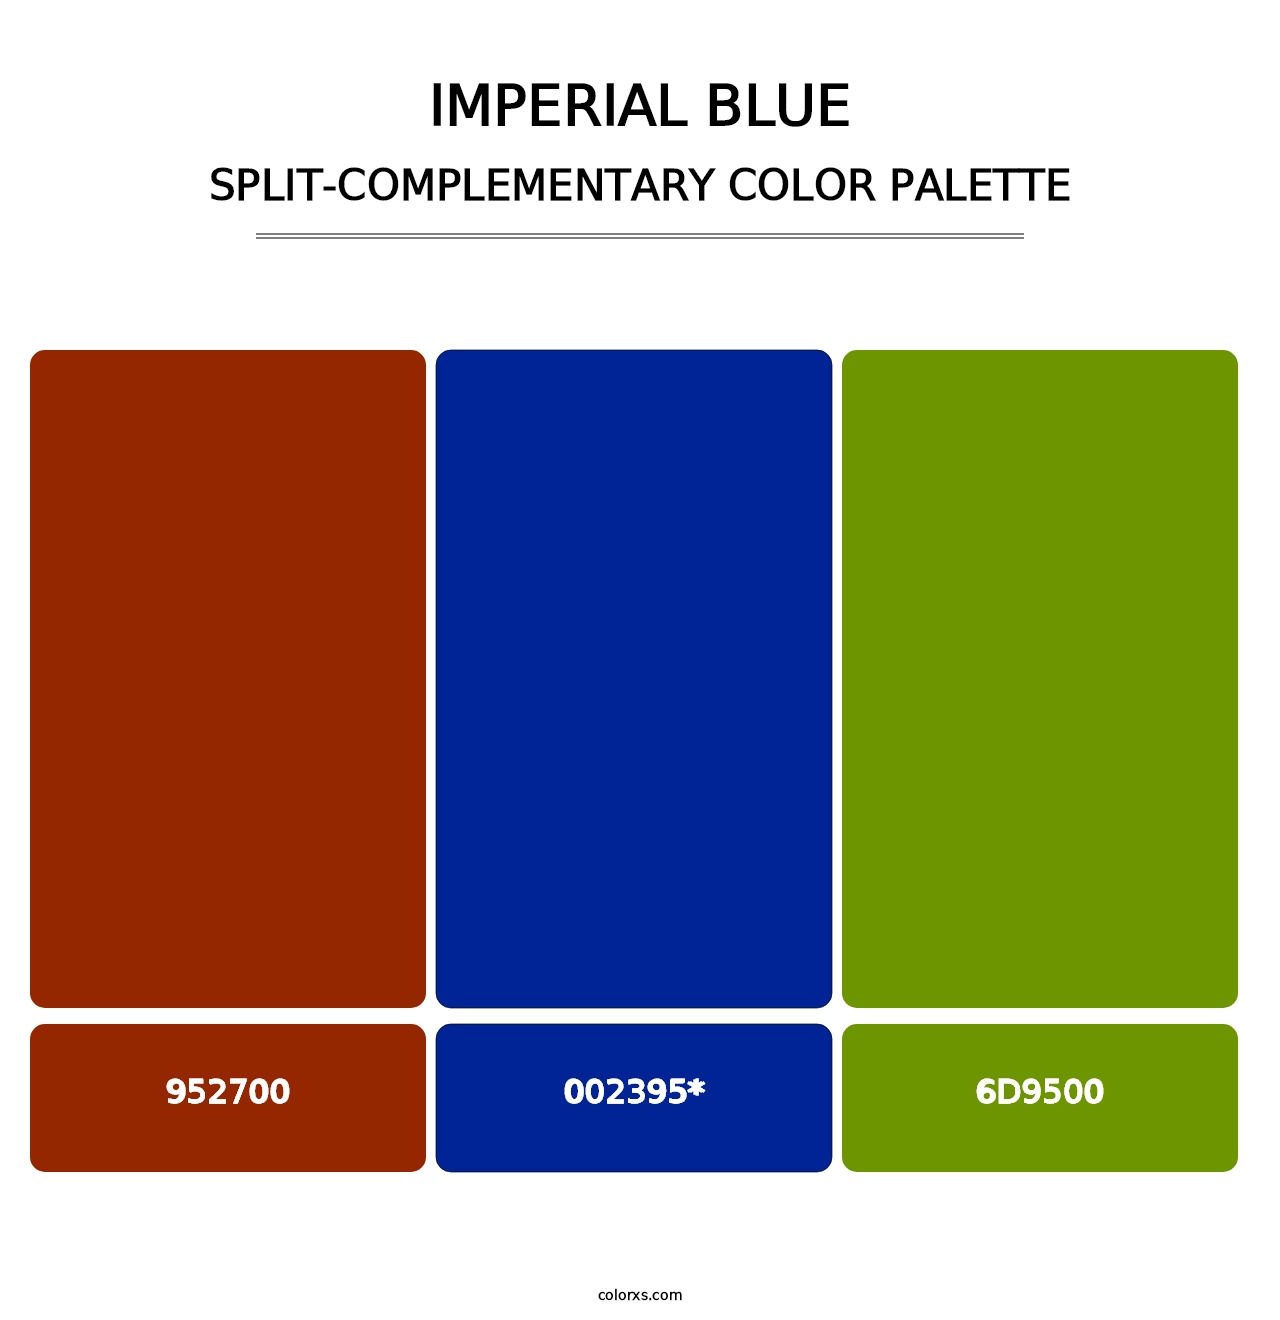 Imperial Blue - Split-Complementary Color Palette